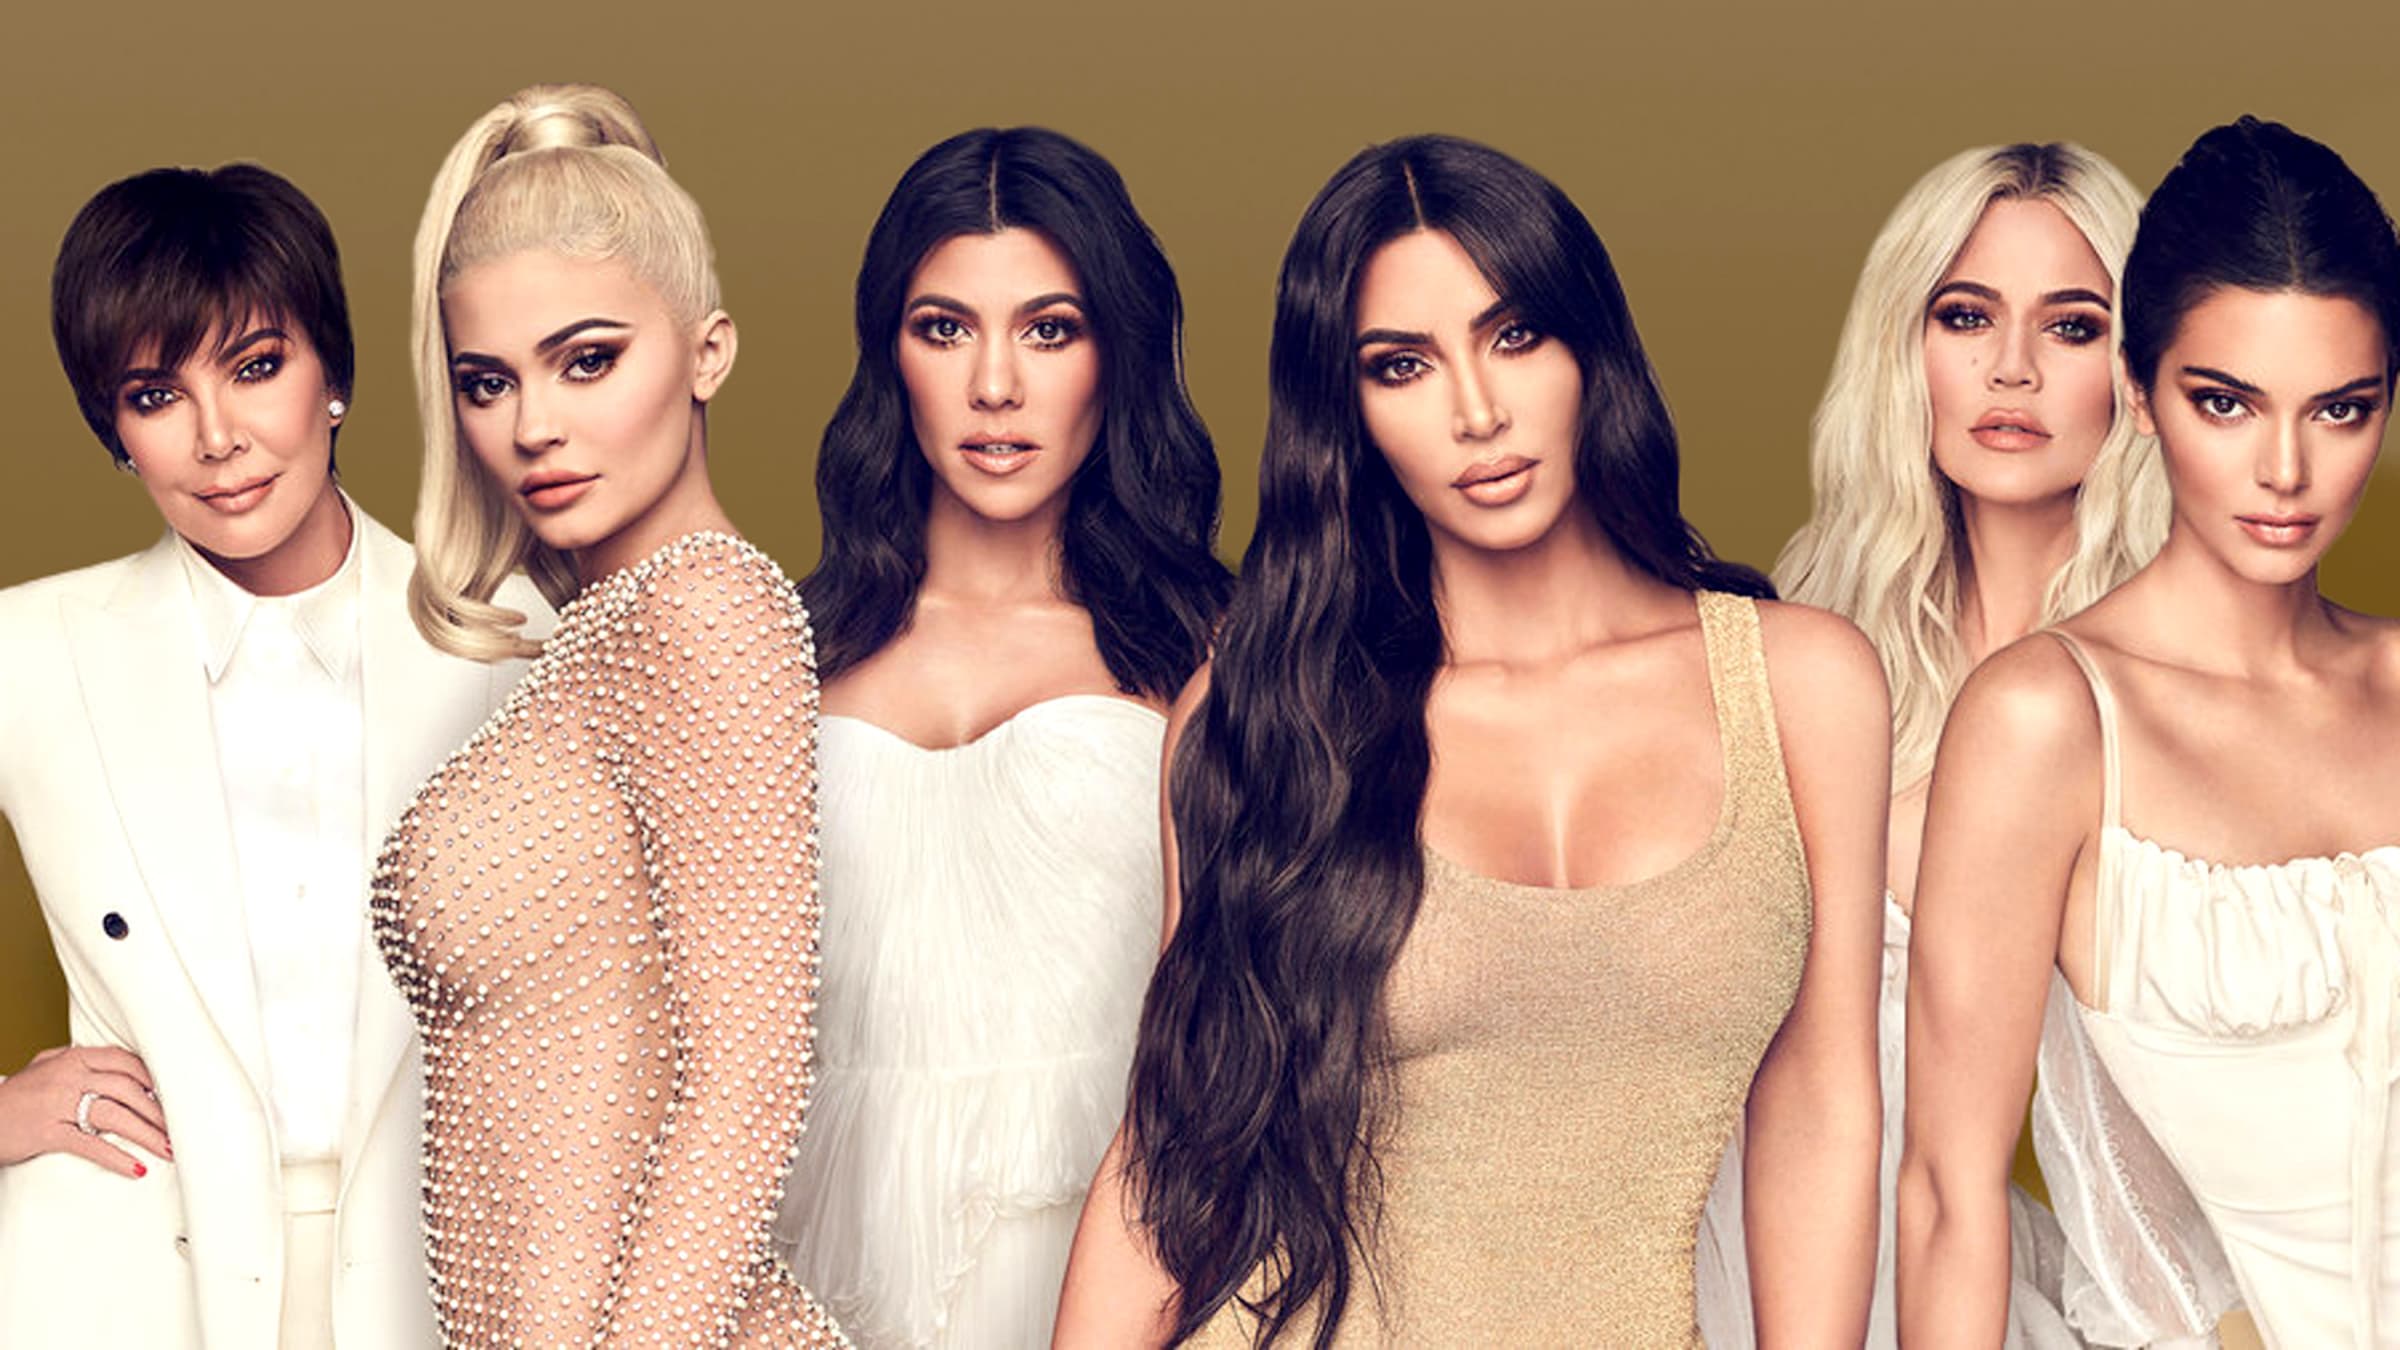 Why America Turned on the Kardashians